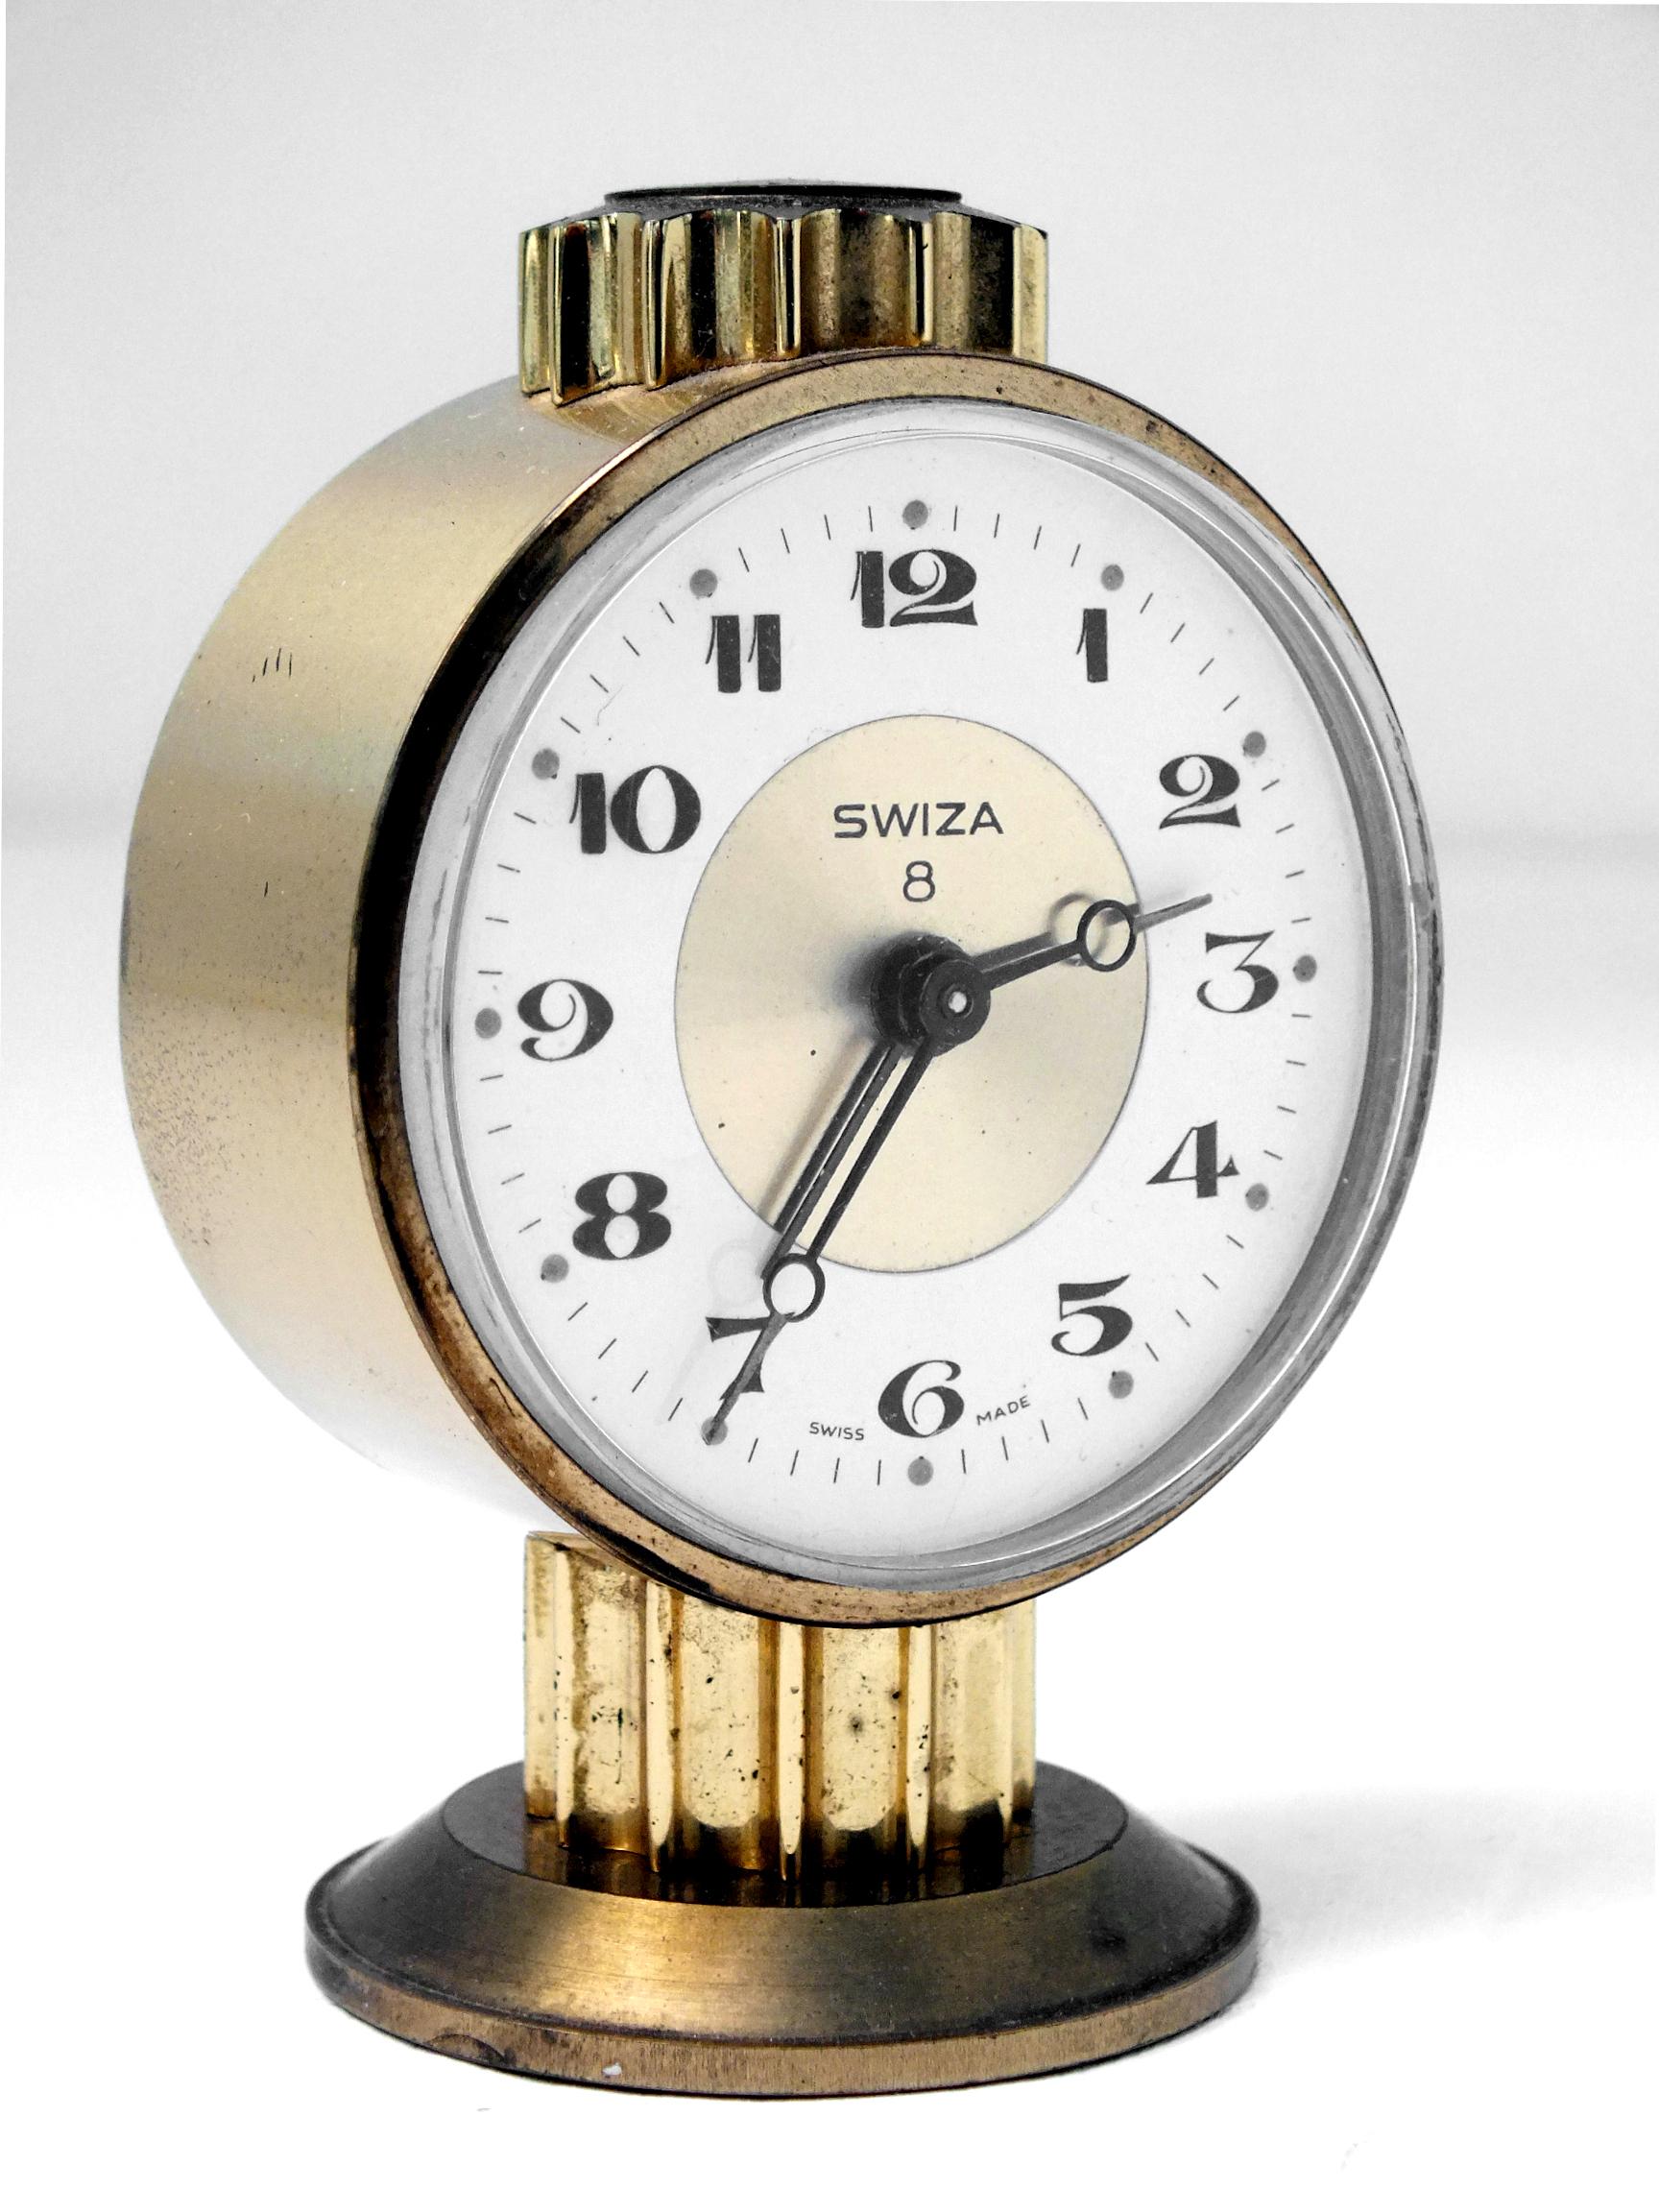 Swiza 8 days vintage alarm clock Horloge de table design suisse en laiton en bon état vintage.